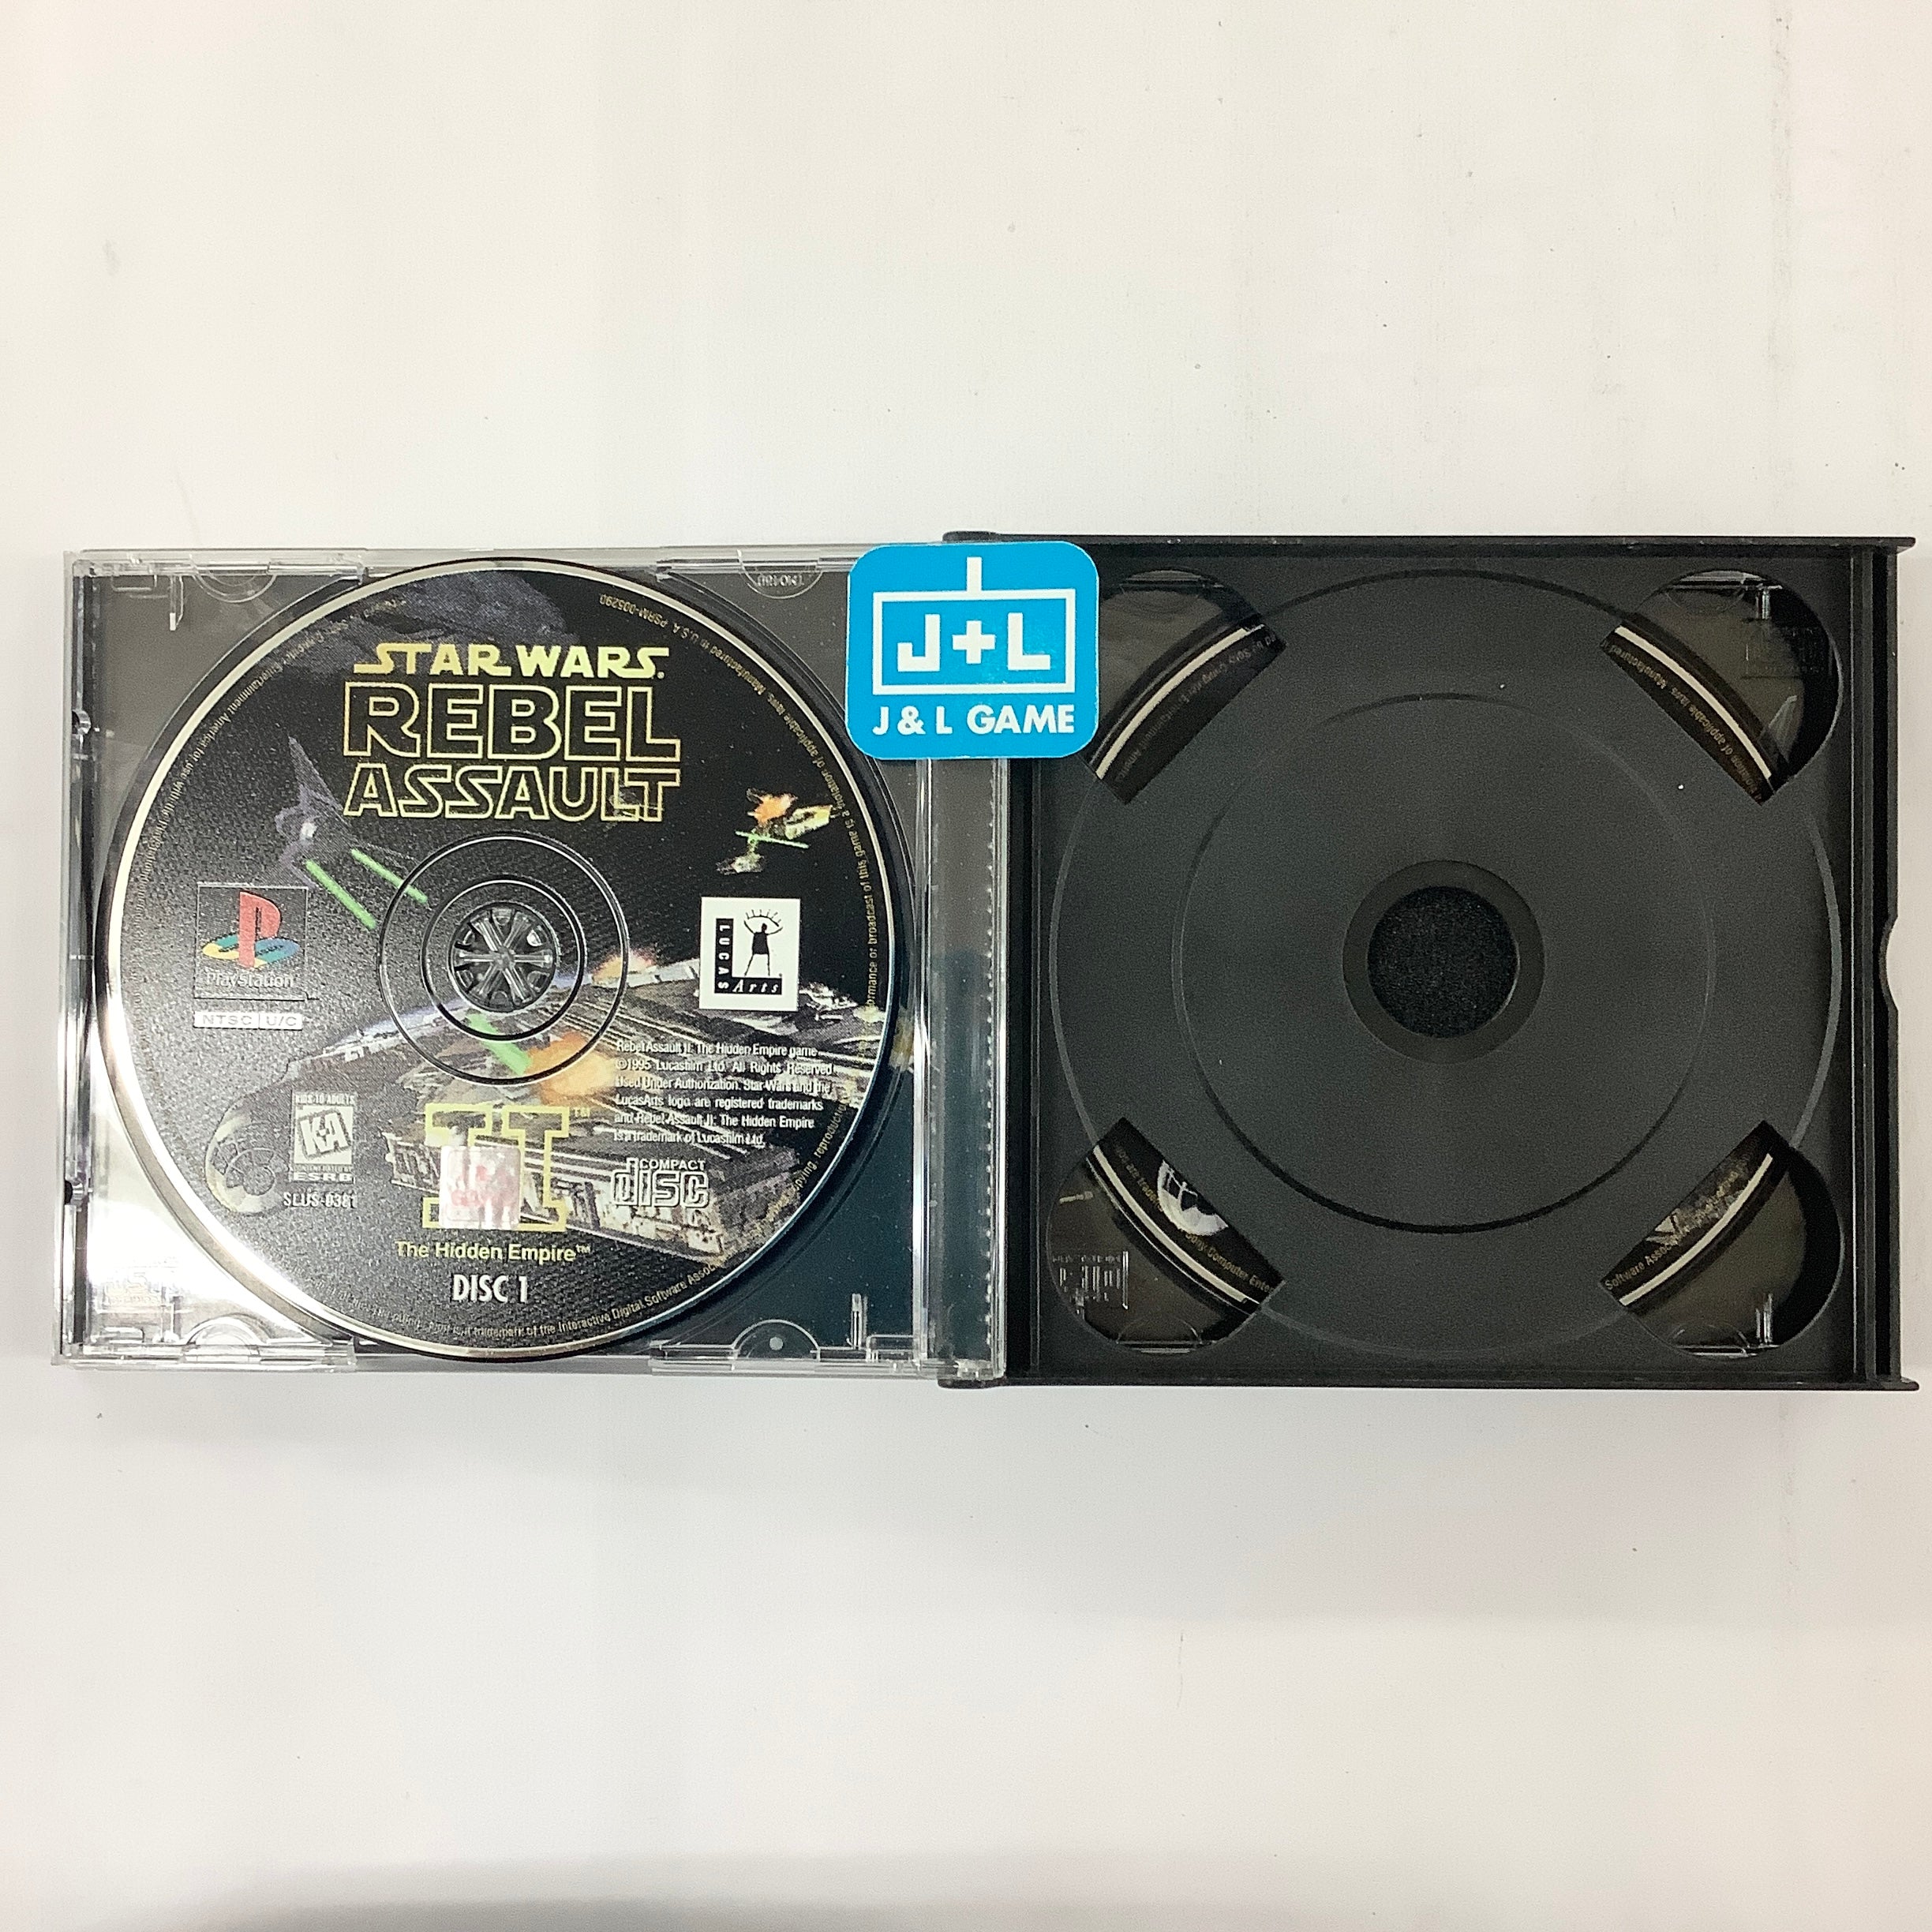 Star Wars: Rebel Assault II - The Hidden Empire - (PS1) PlayStation 1 [Pre-Owned] Video Games LucasArts   